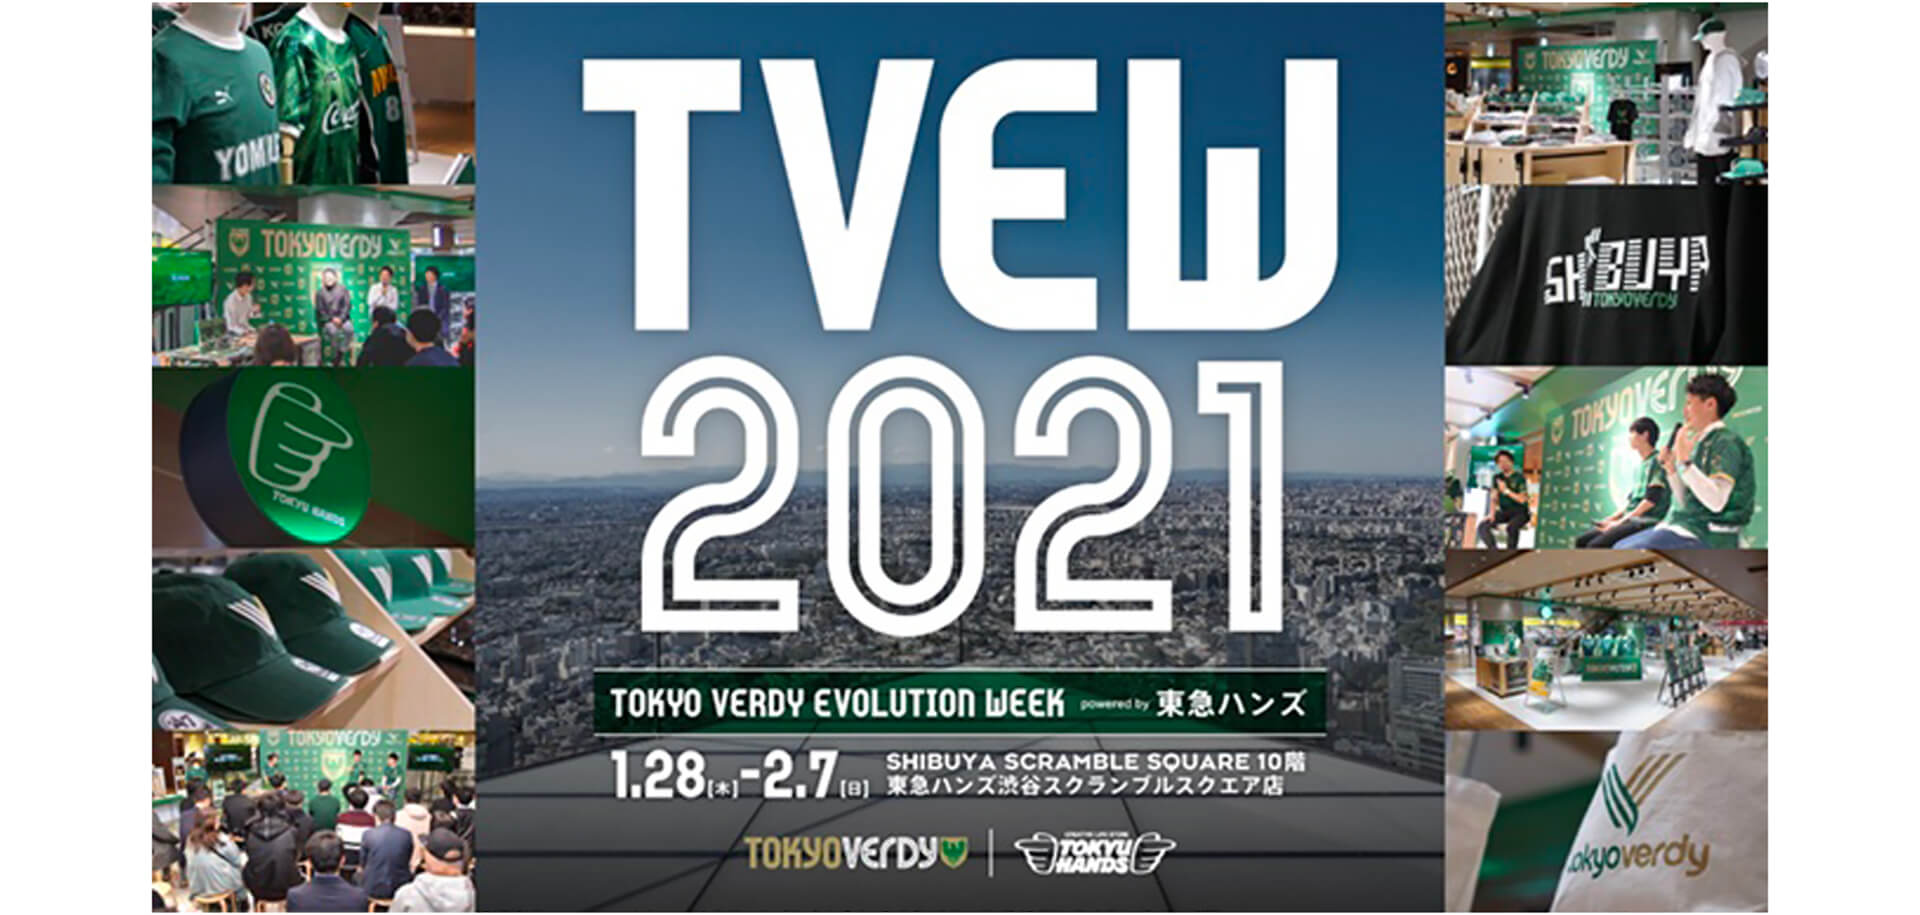 TOKYO VERDY EVOLUTION WEEK 2021 in SHIBUYA powered by 東急ハンズ